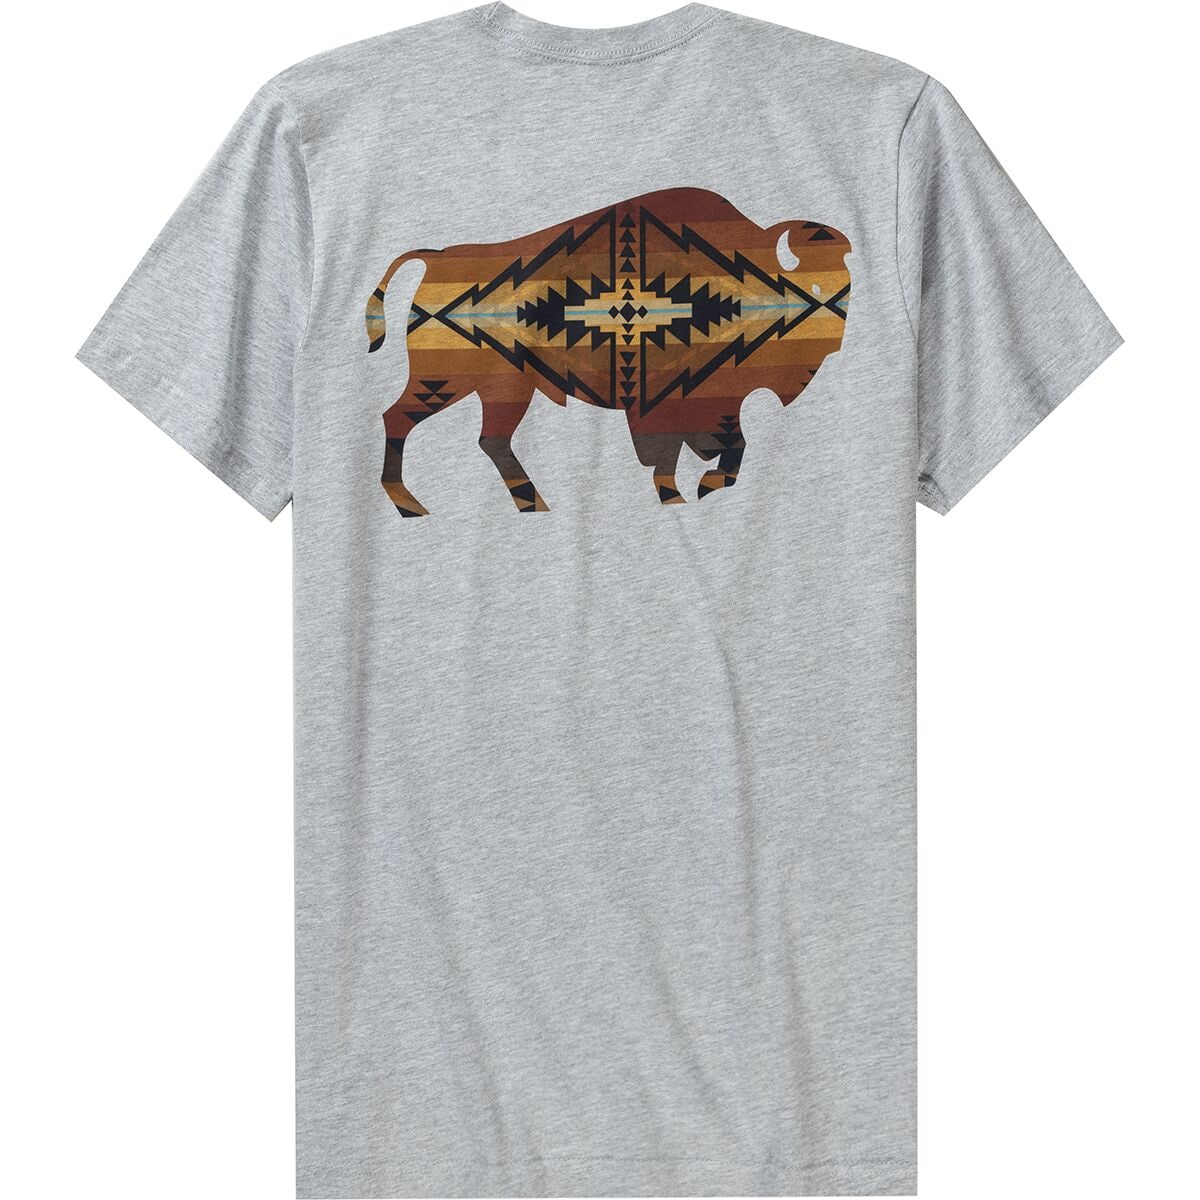 Trapper Peak Heather Graphic T-Shirt - Men